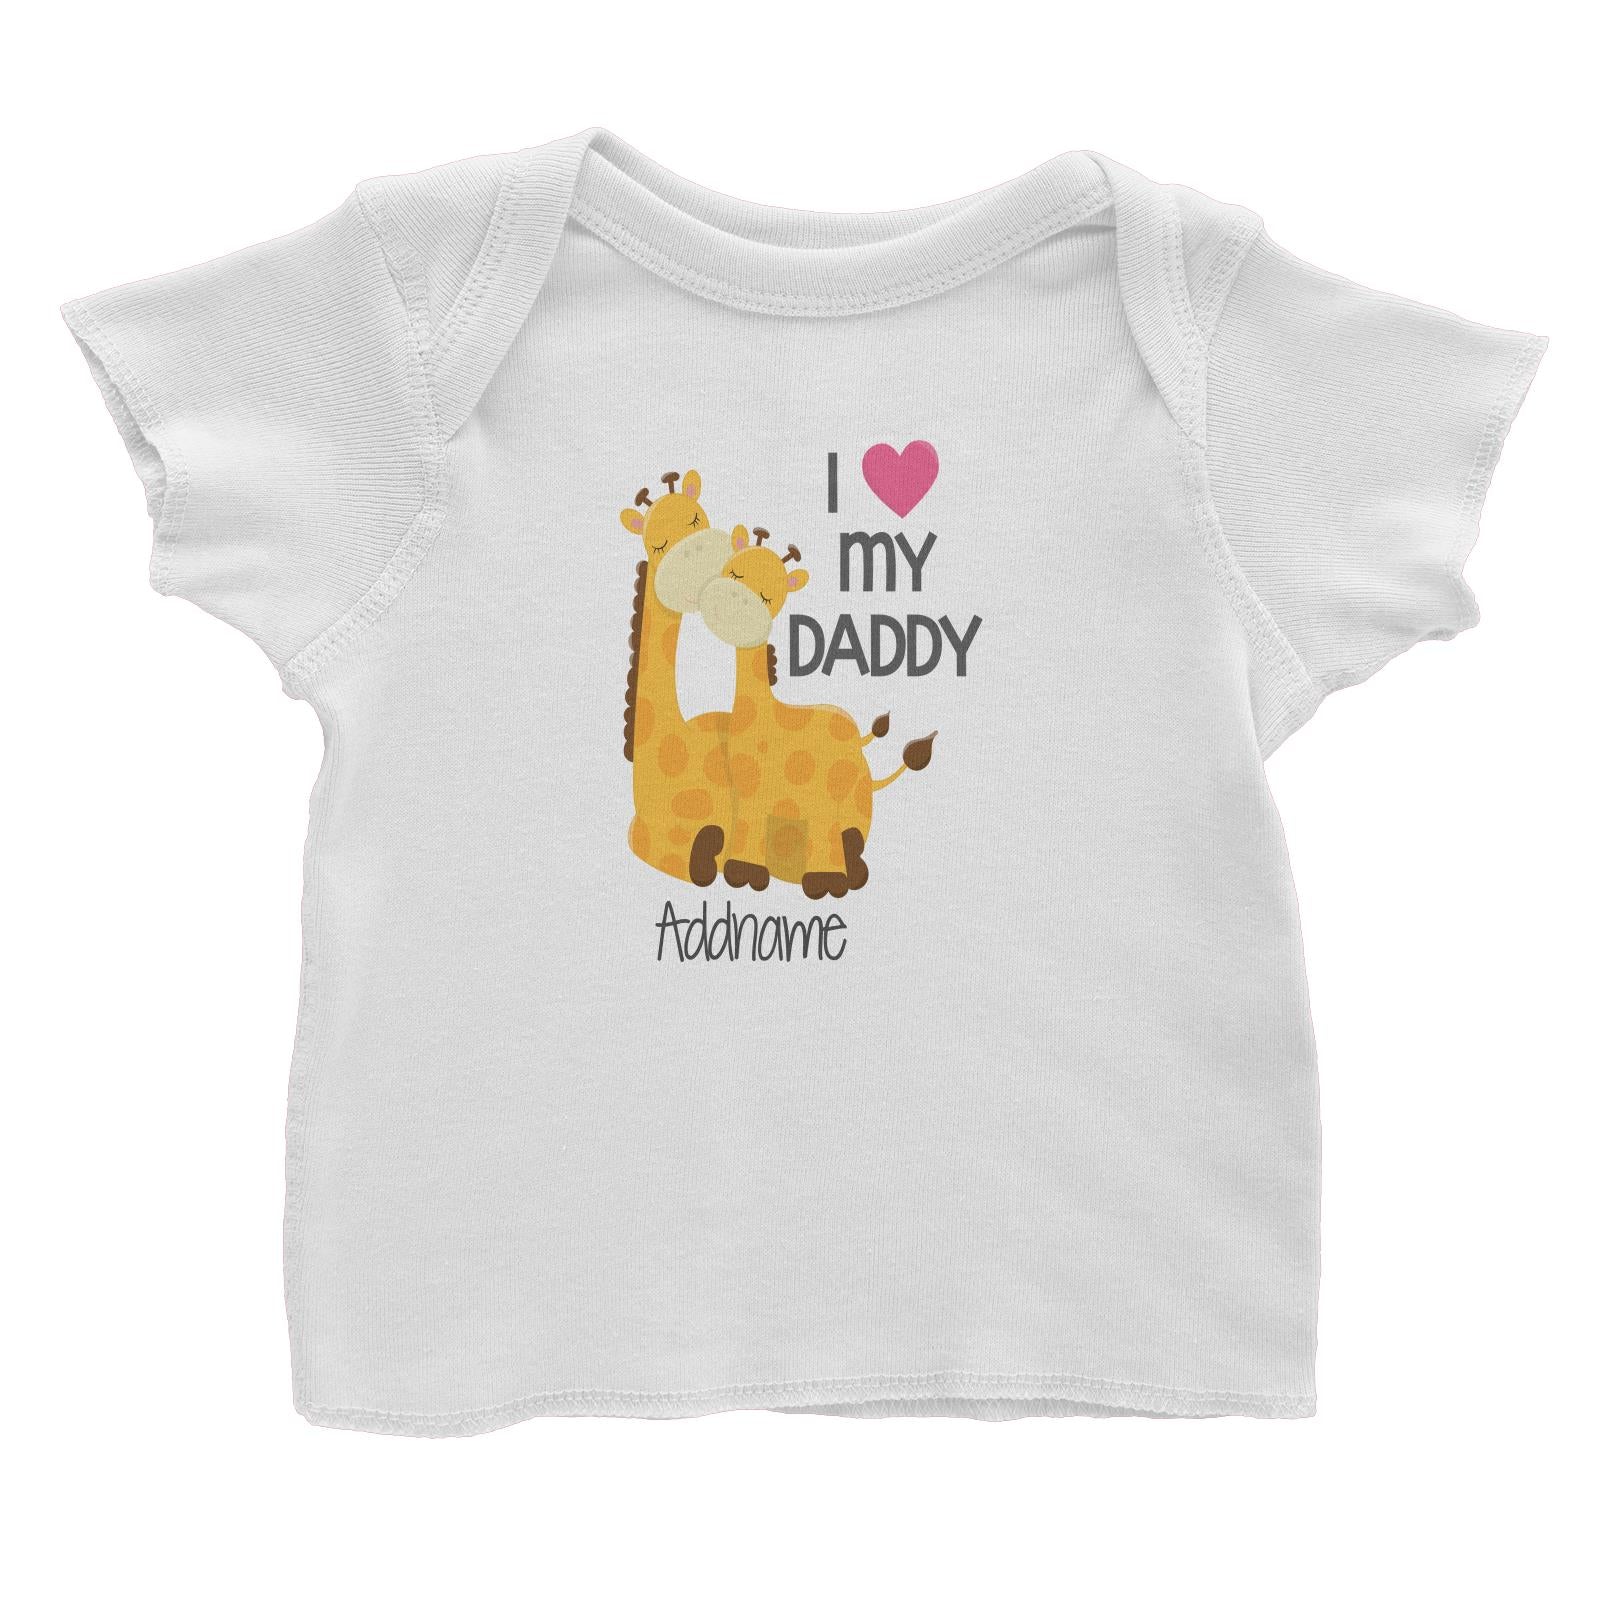 Animal &Loved Ones Giraffe I Love My Daddy Addname Baby T-Shirt